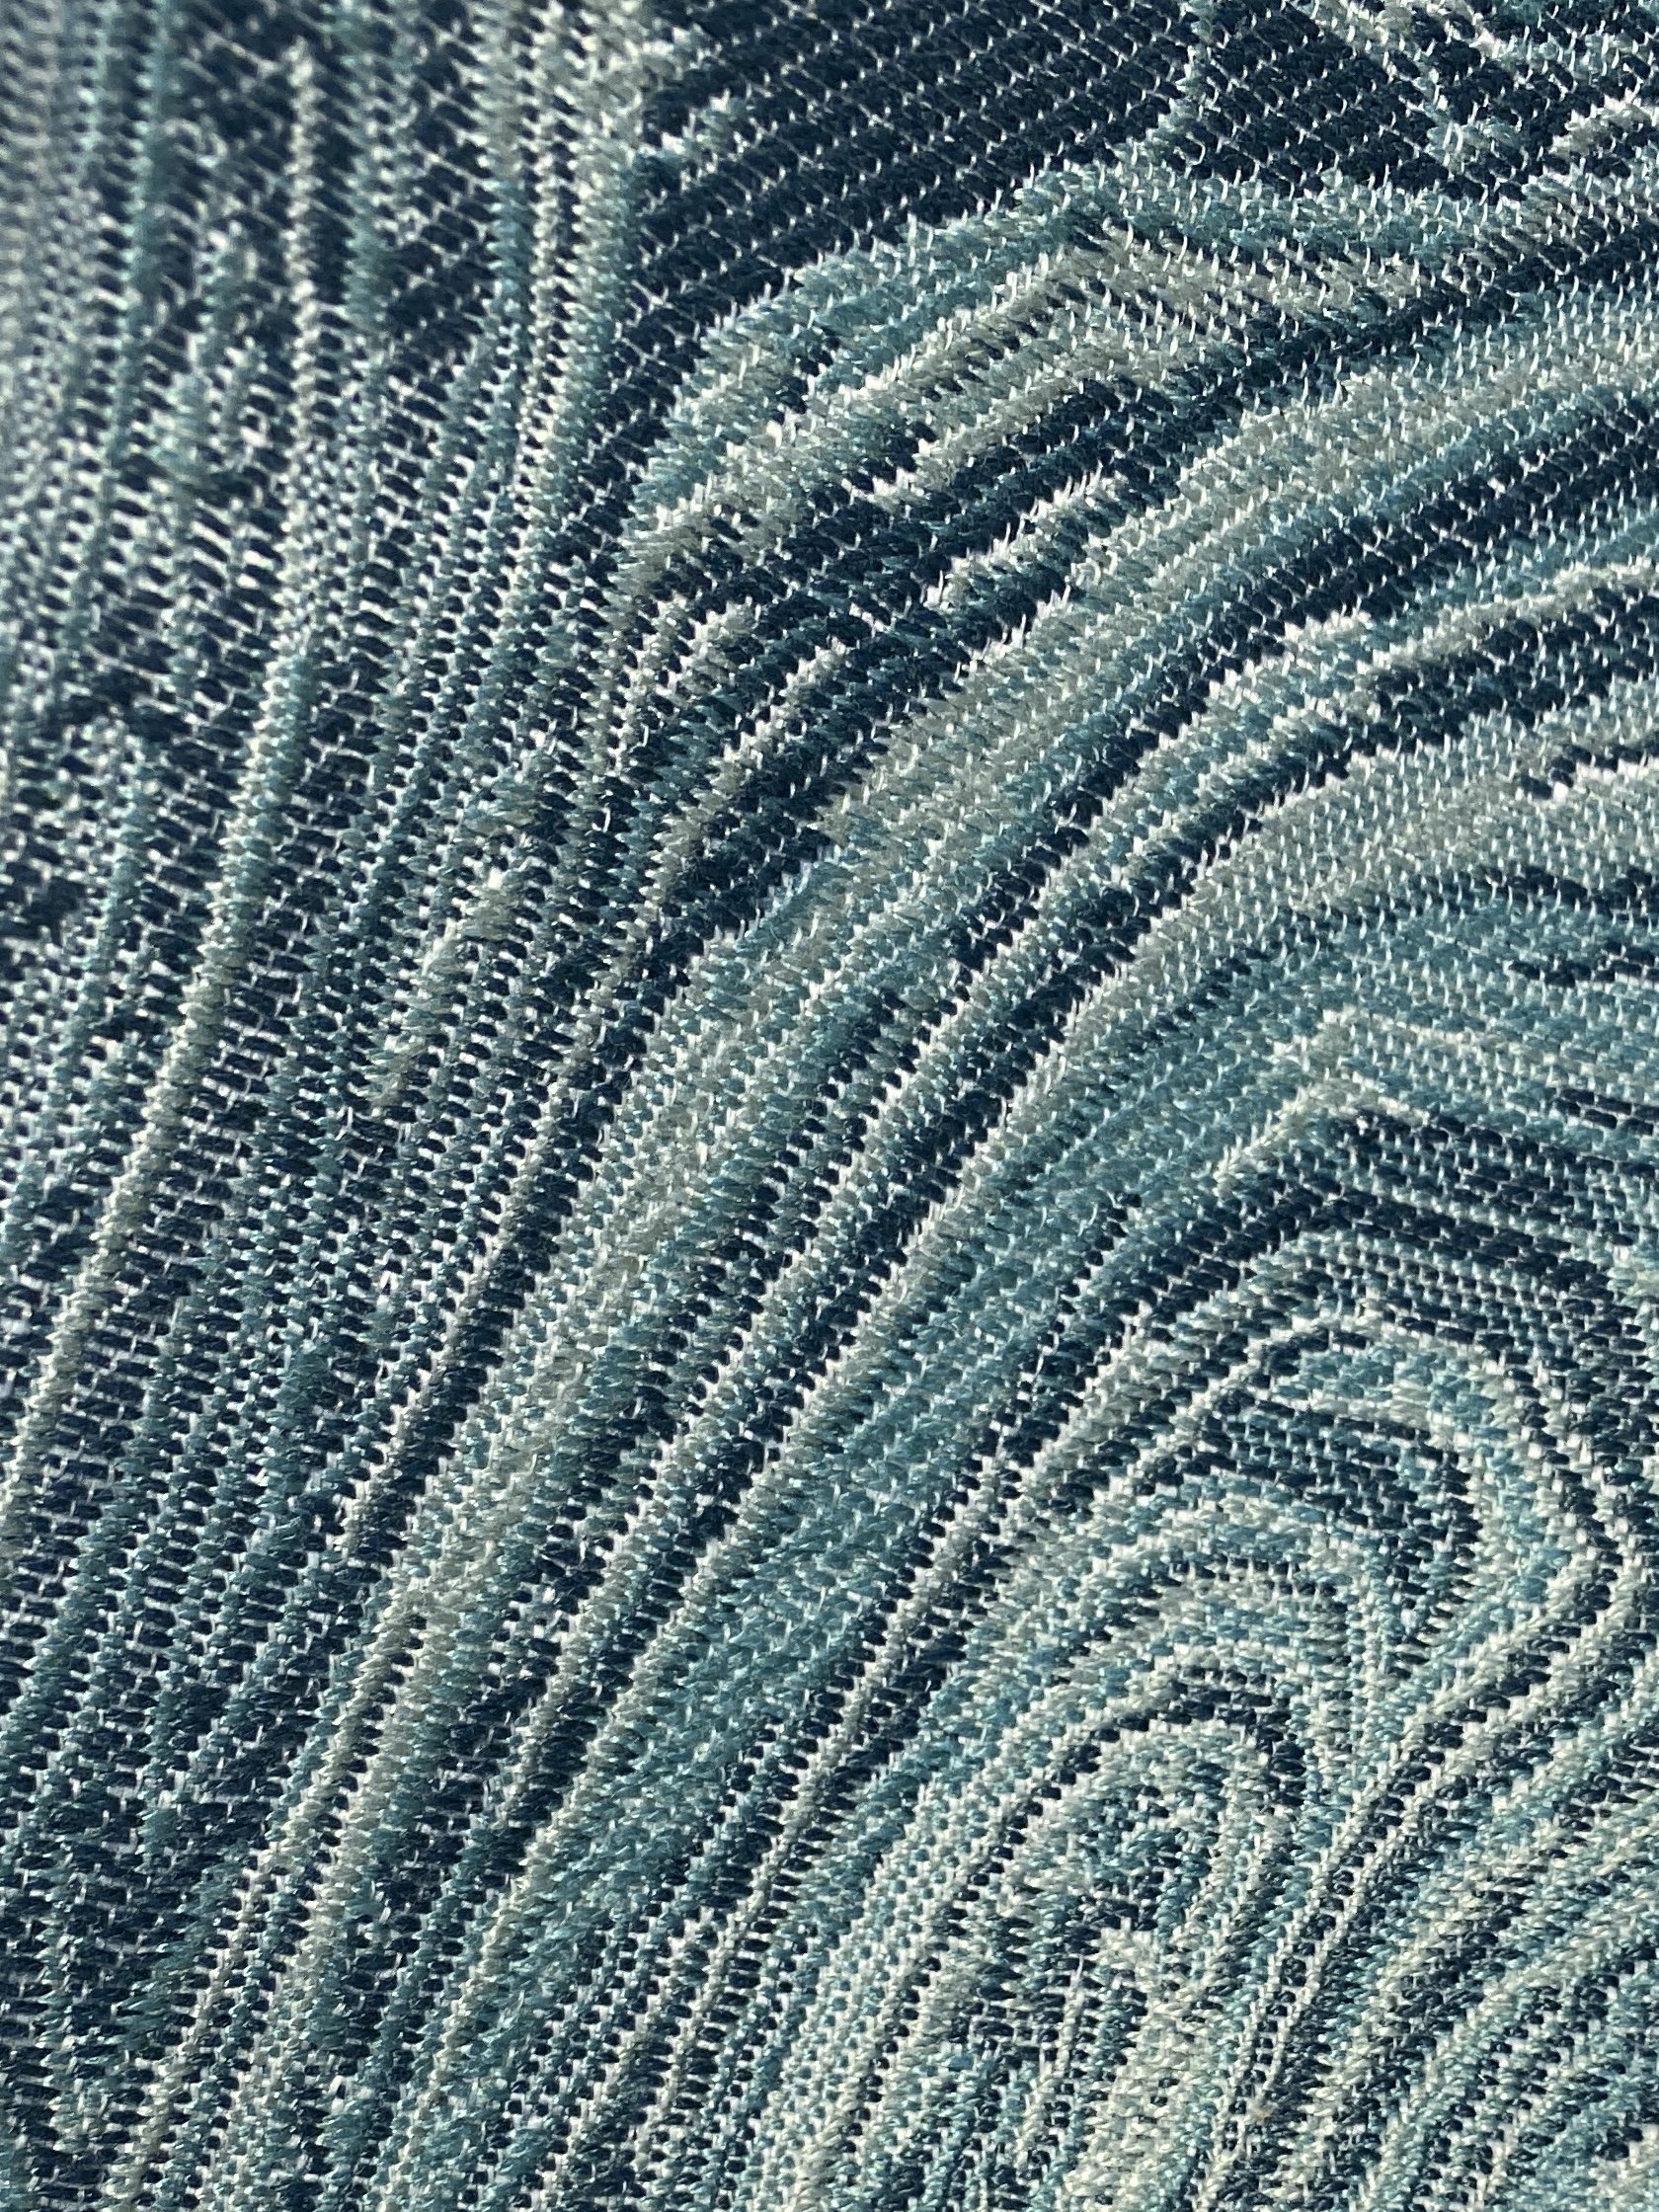 Teal marble fabric.jpg